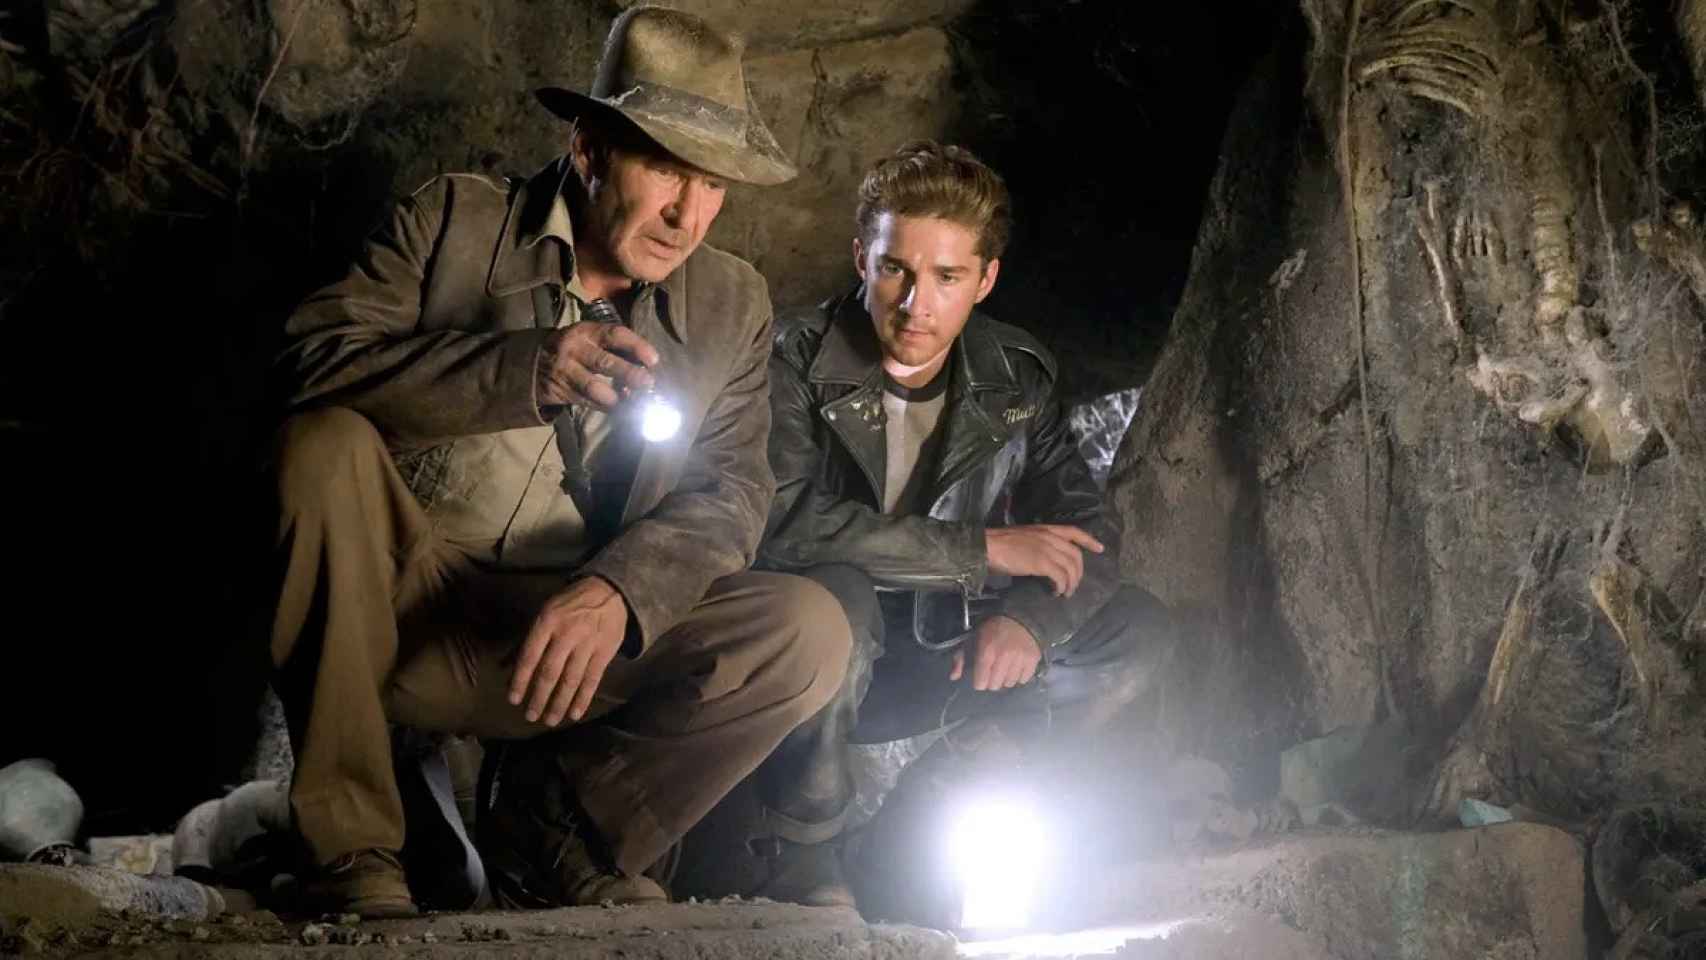 'Indiana Jones and the Kingdom of the Crystal Skull'